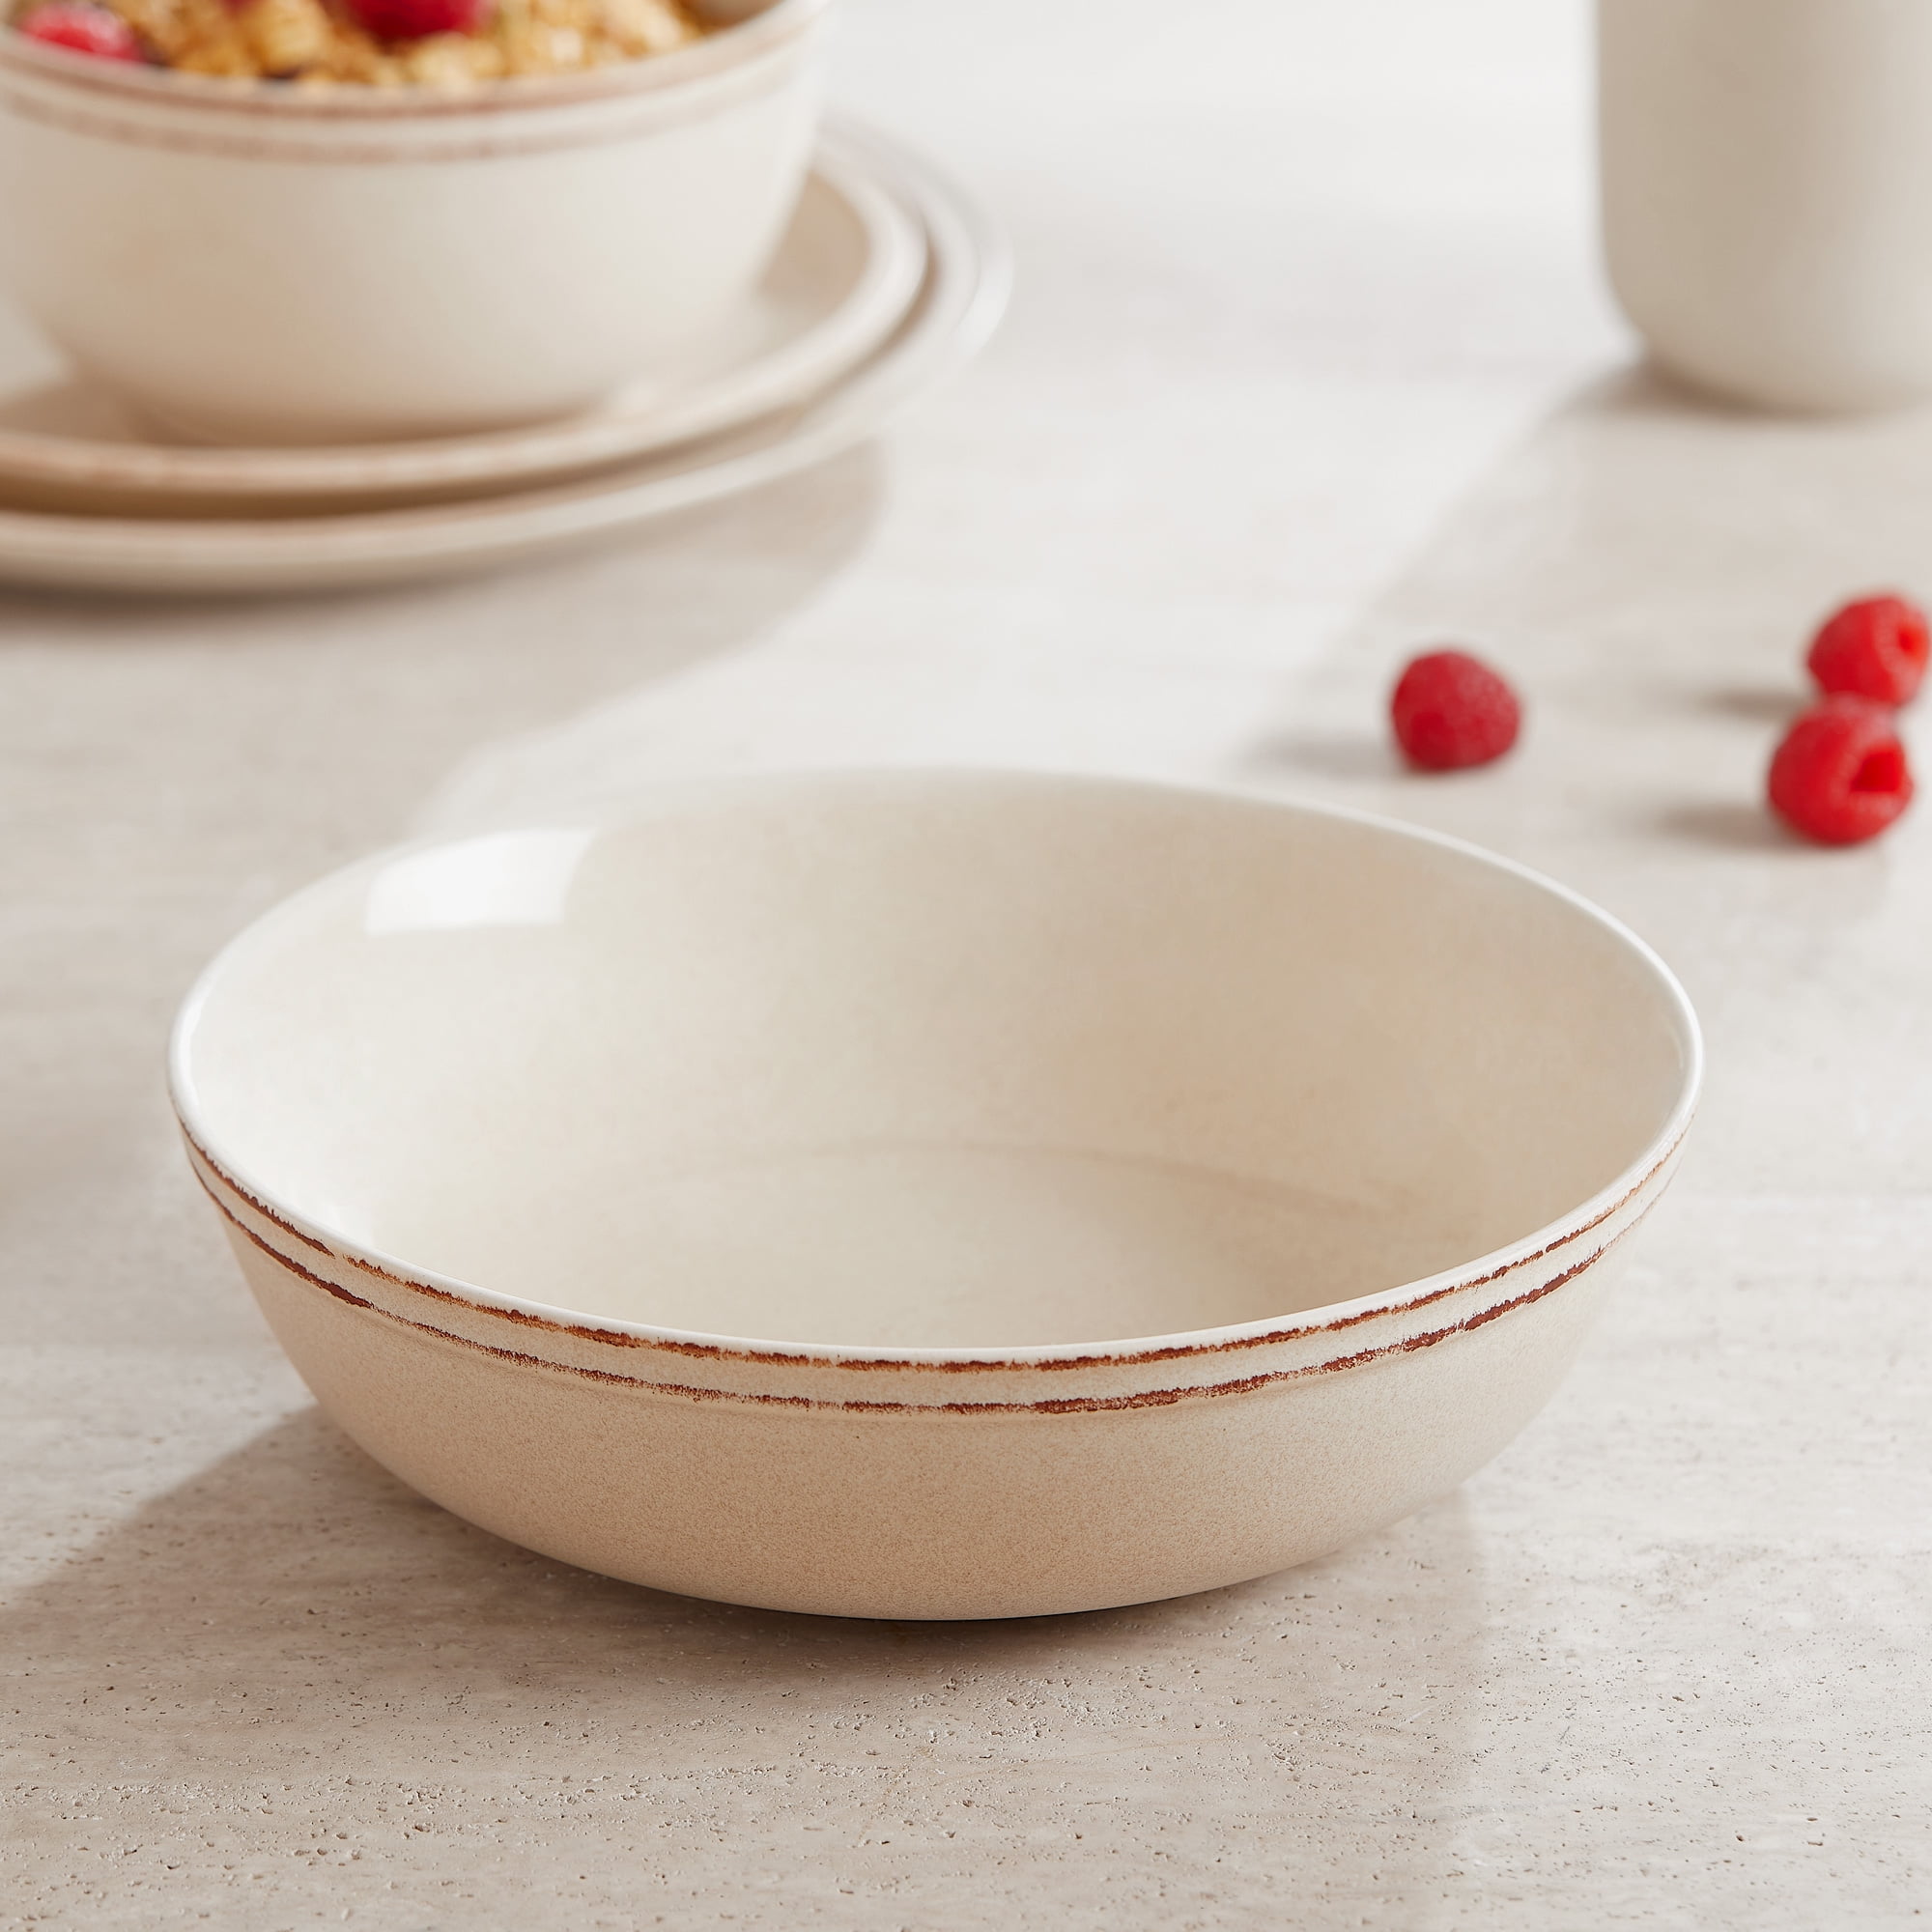 Cream Ceramic Porter Bowl - Brentwood General Store